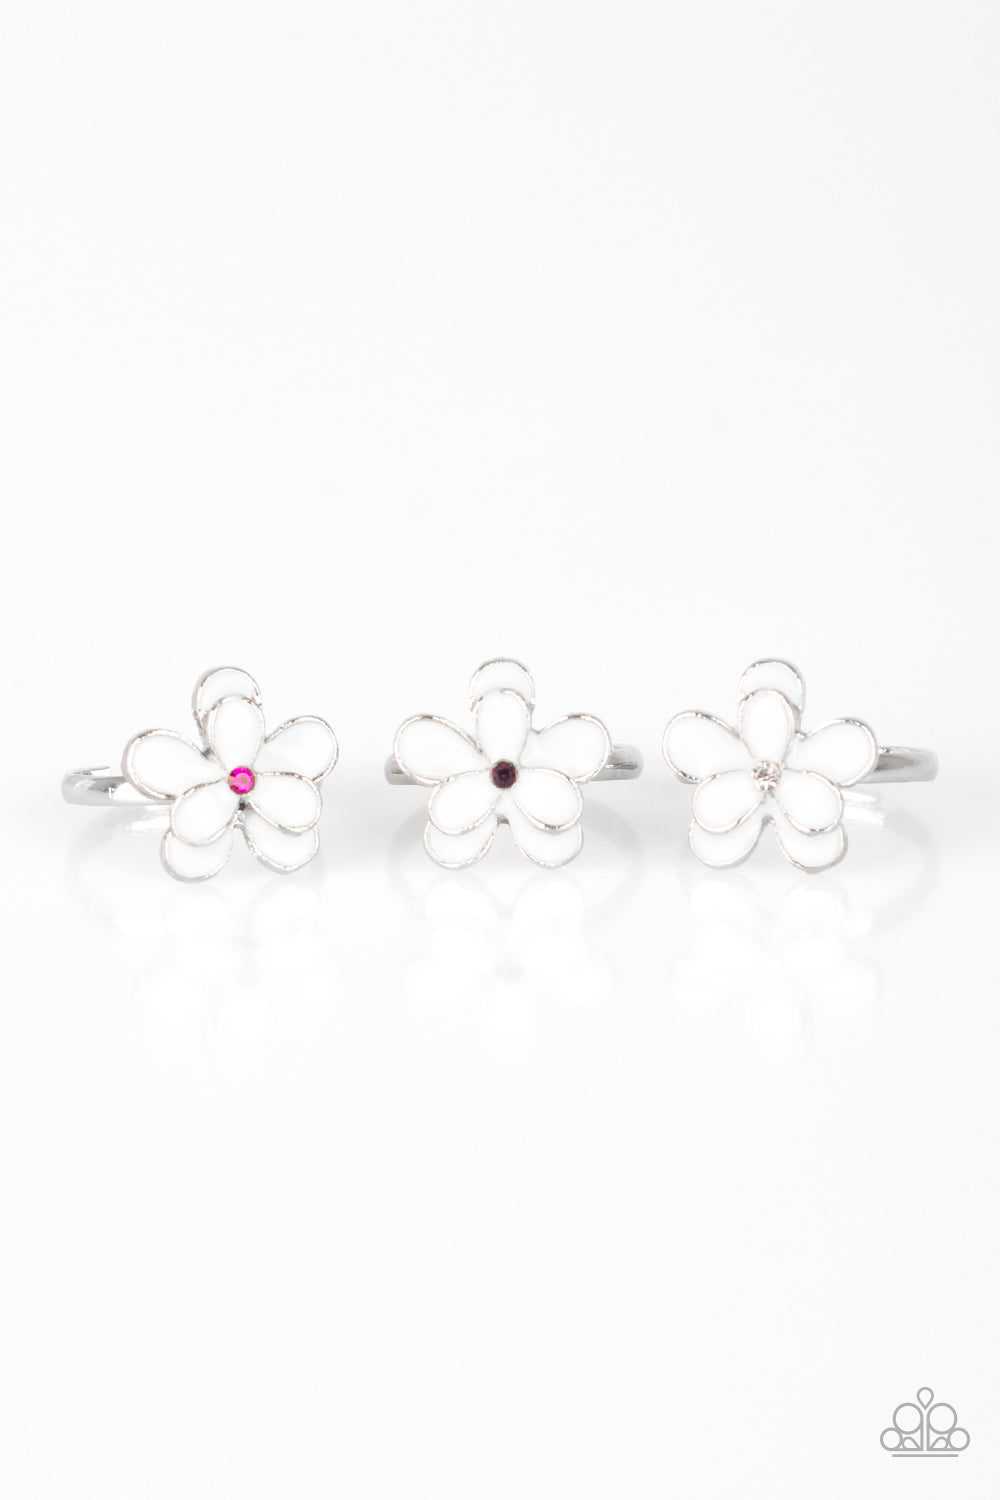 Paparazzi Starlet Shimmer Girls Rings - 10 - White Flower w/Rhinestone center - $5 Jewelry With Ashley Swint